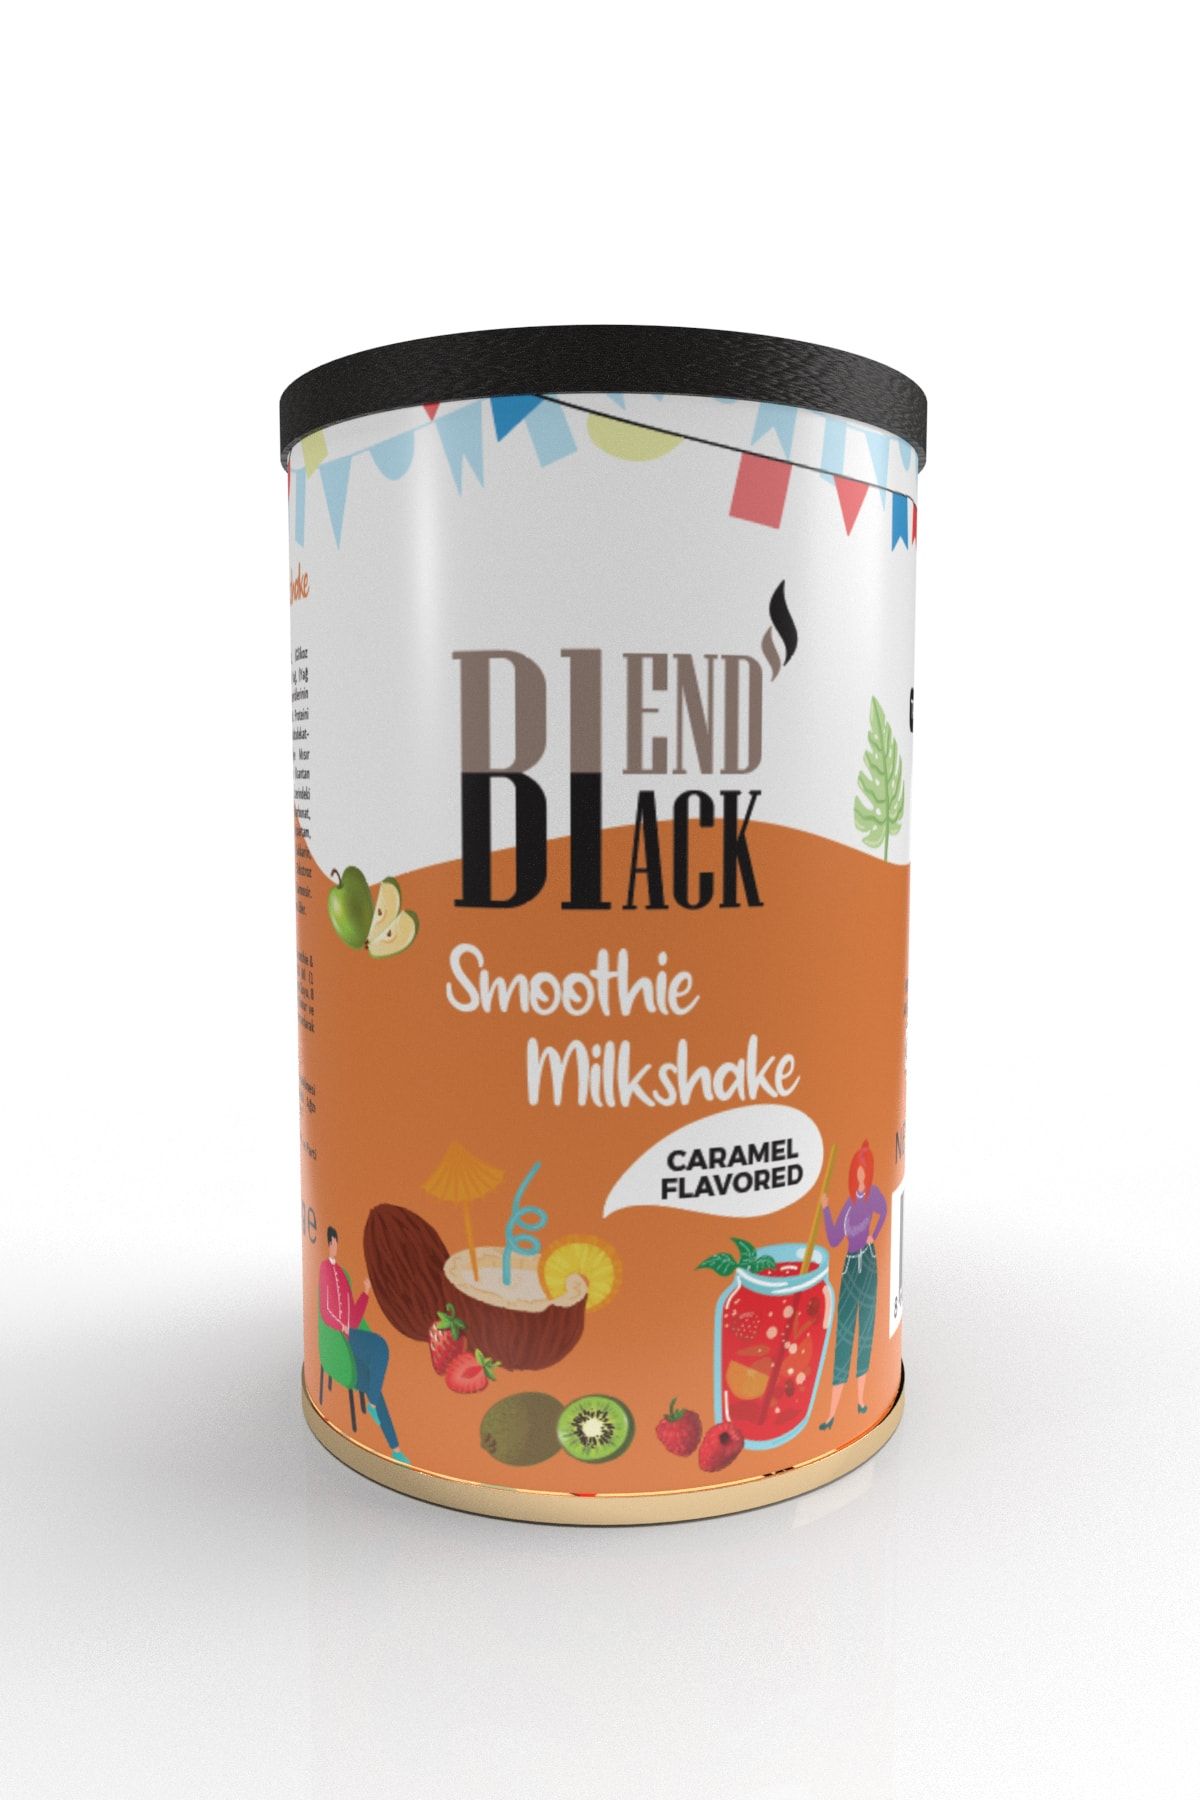 Blendblack Smoothie/milkshake Caramel Flavored 500gr Teneke Kutu